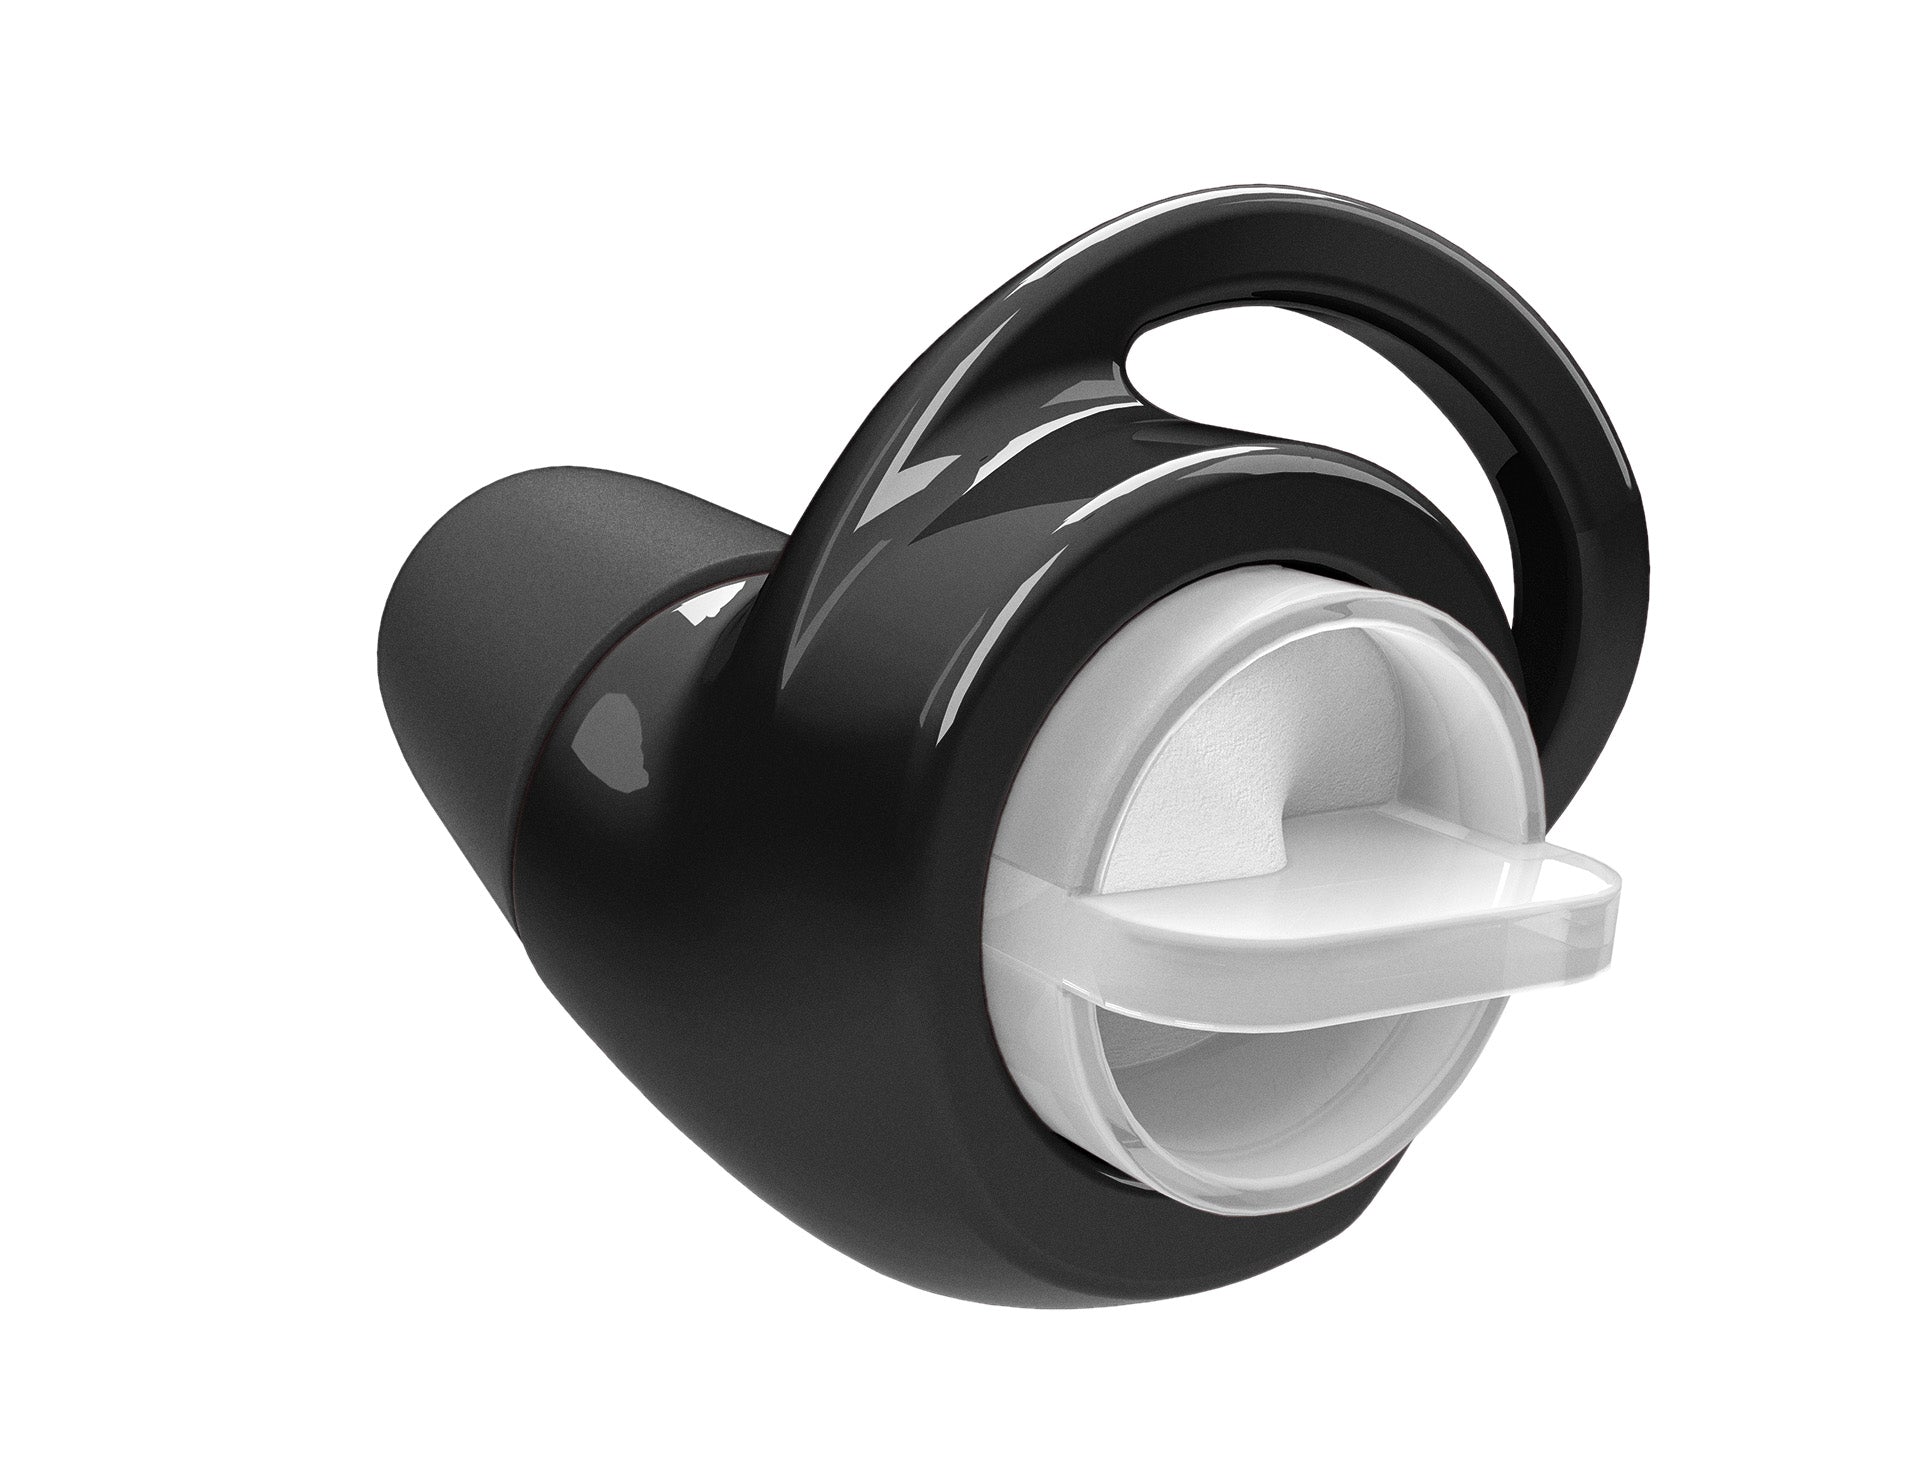 Adjustable Earplug & Wireless Bluetooth<sup>®</sup> Earphone Package